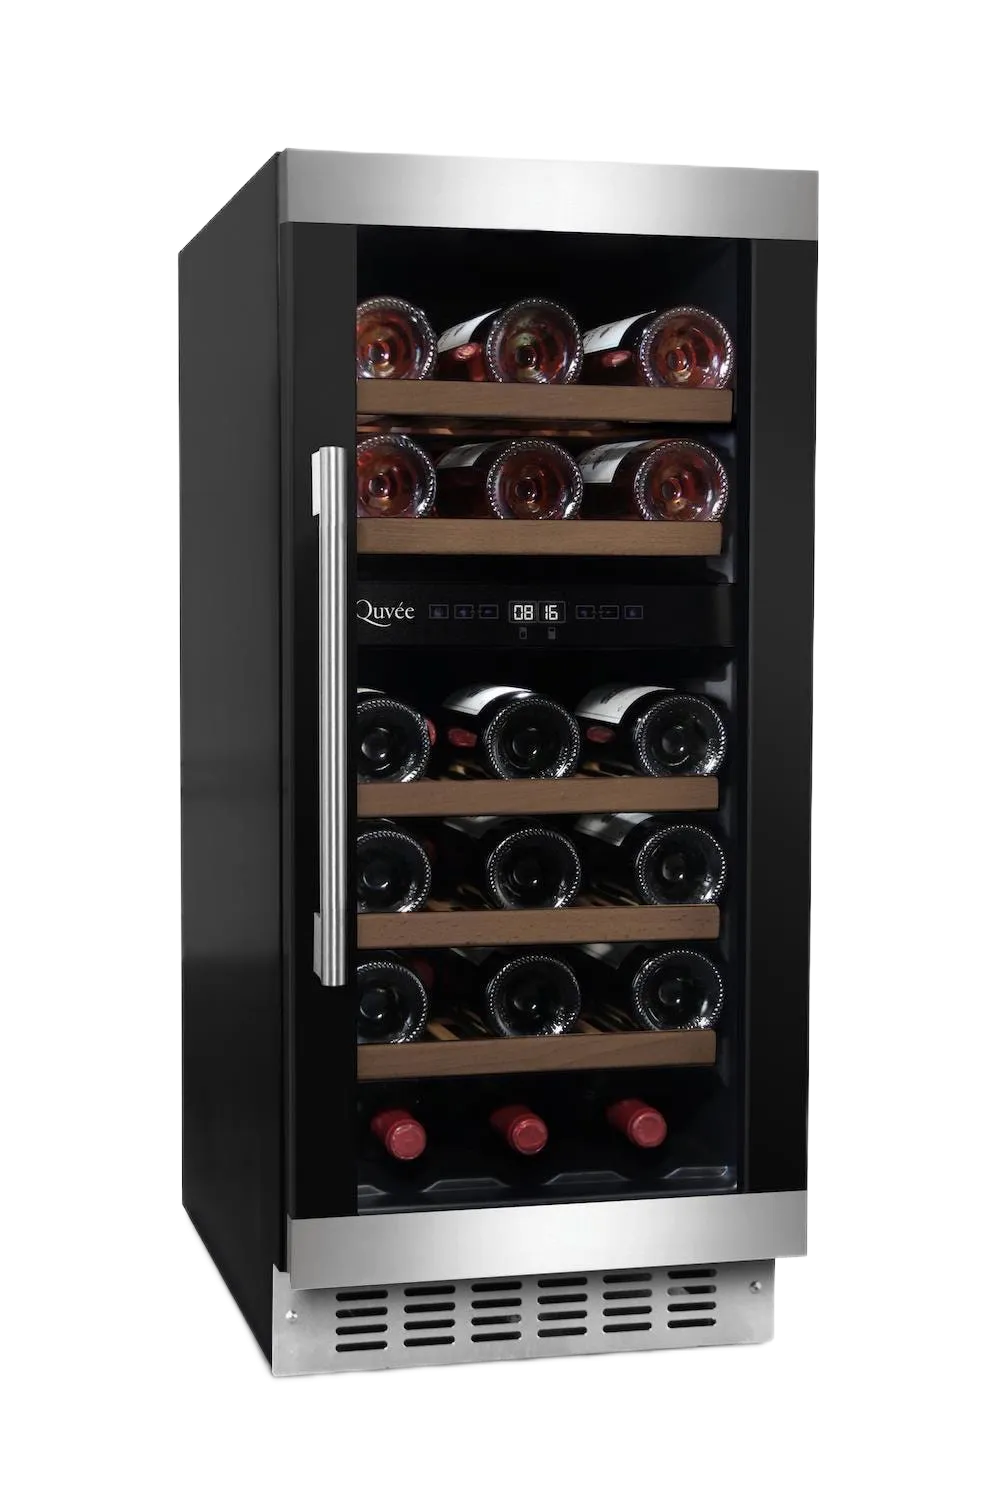 mQuvée vinkyl, WineCave 700 40D Modern